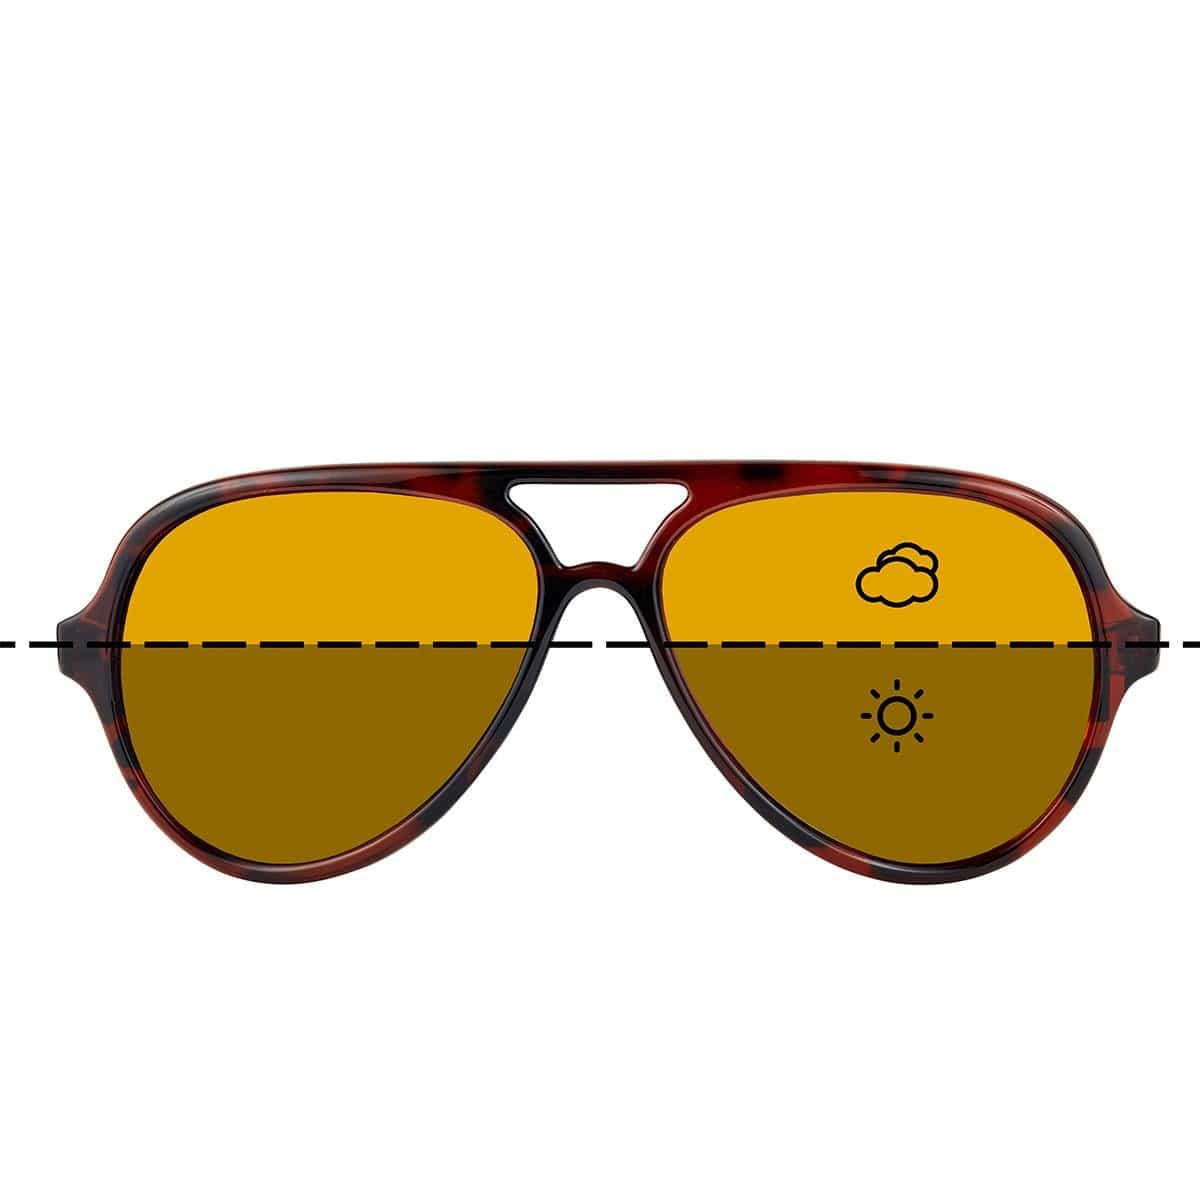 Fortis Aviator Polarised Sunglasses - Carp Fishing.